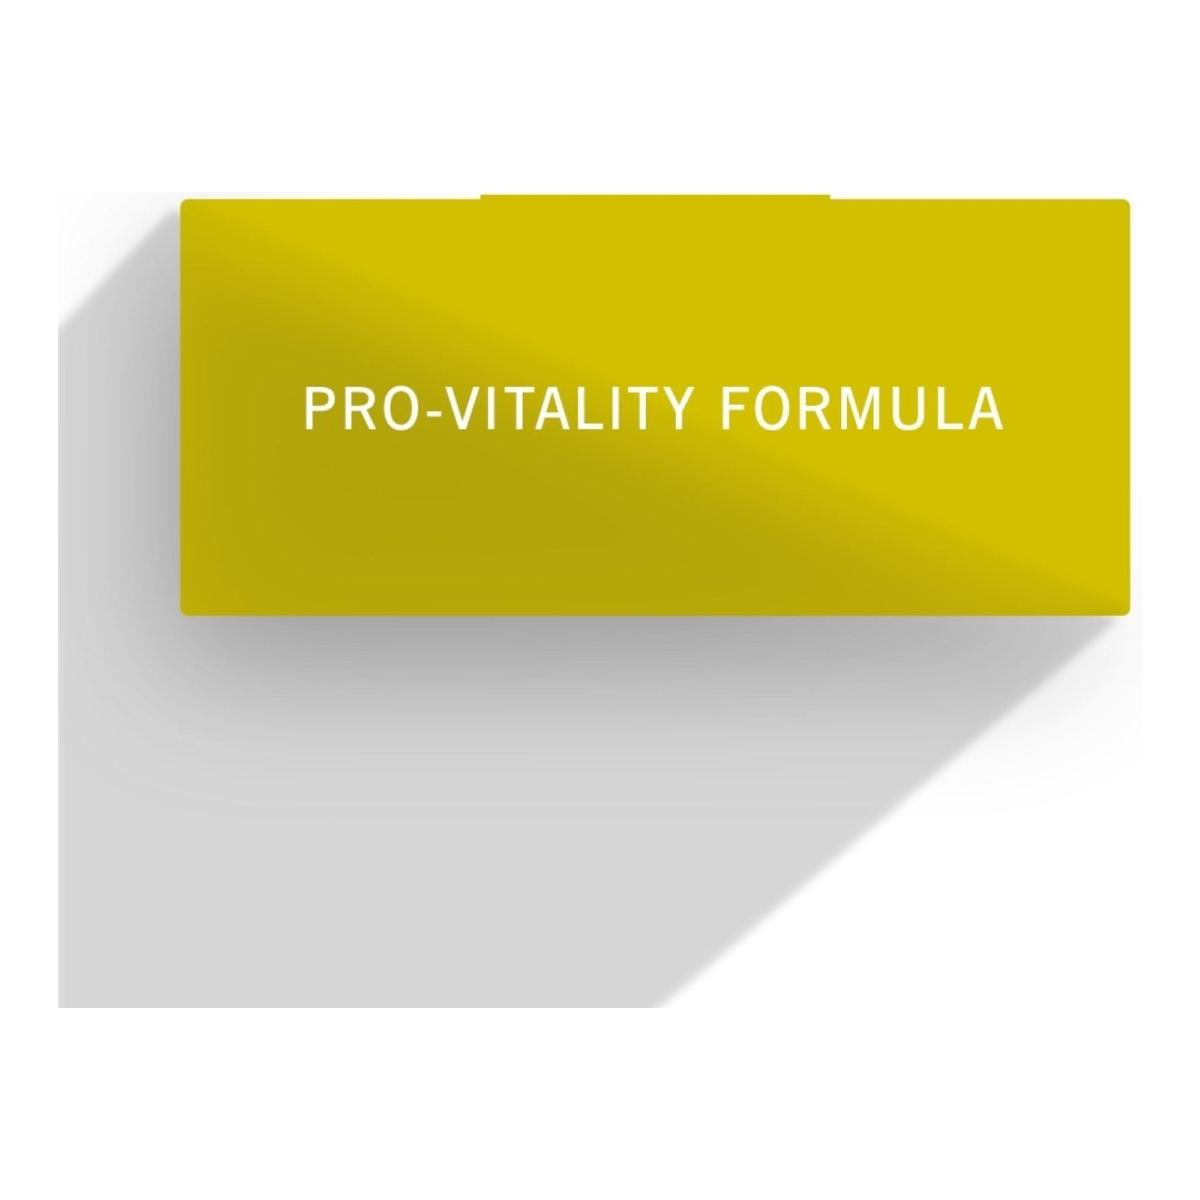 Advanced Nutrition Programme | Pro-Vitality Formula - DG International Ventures Limited